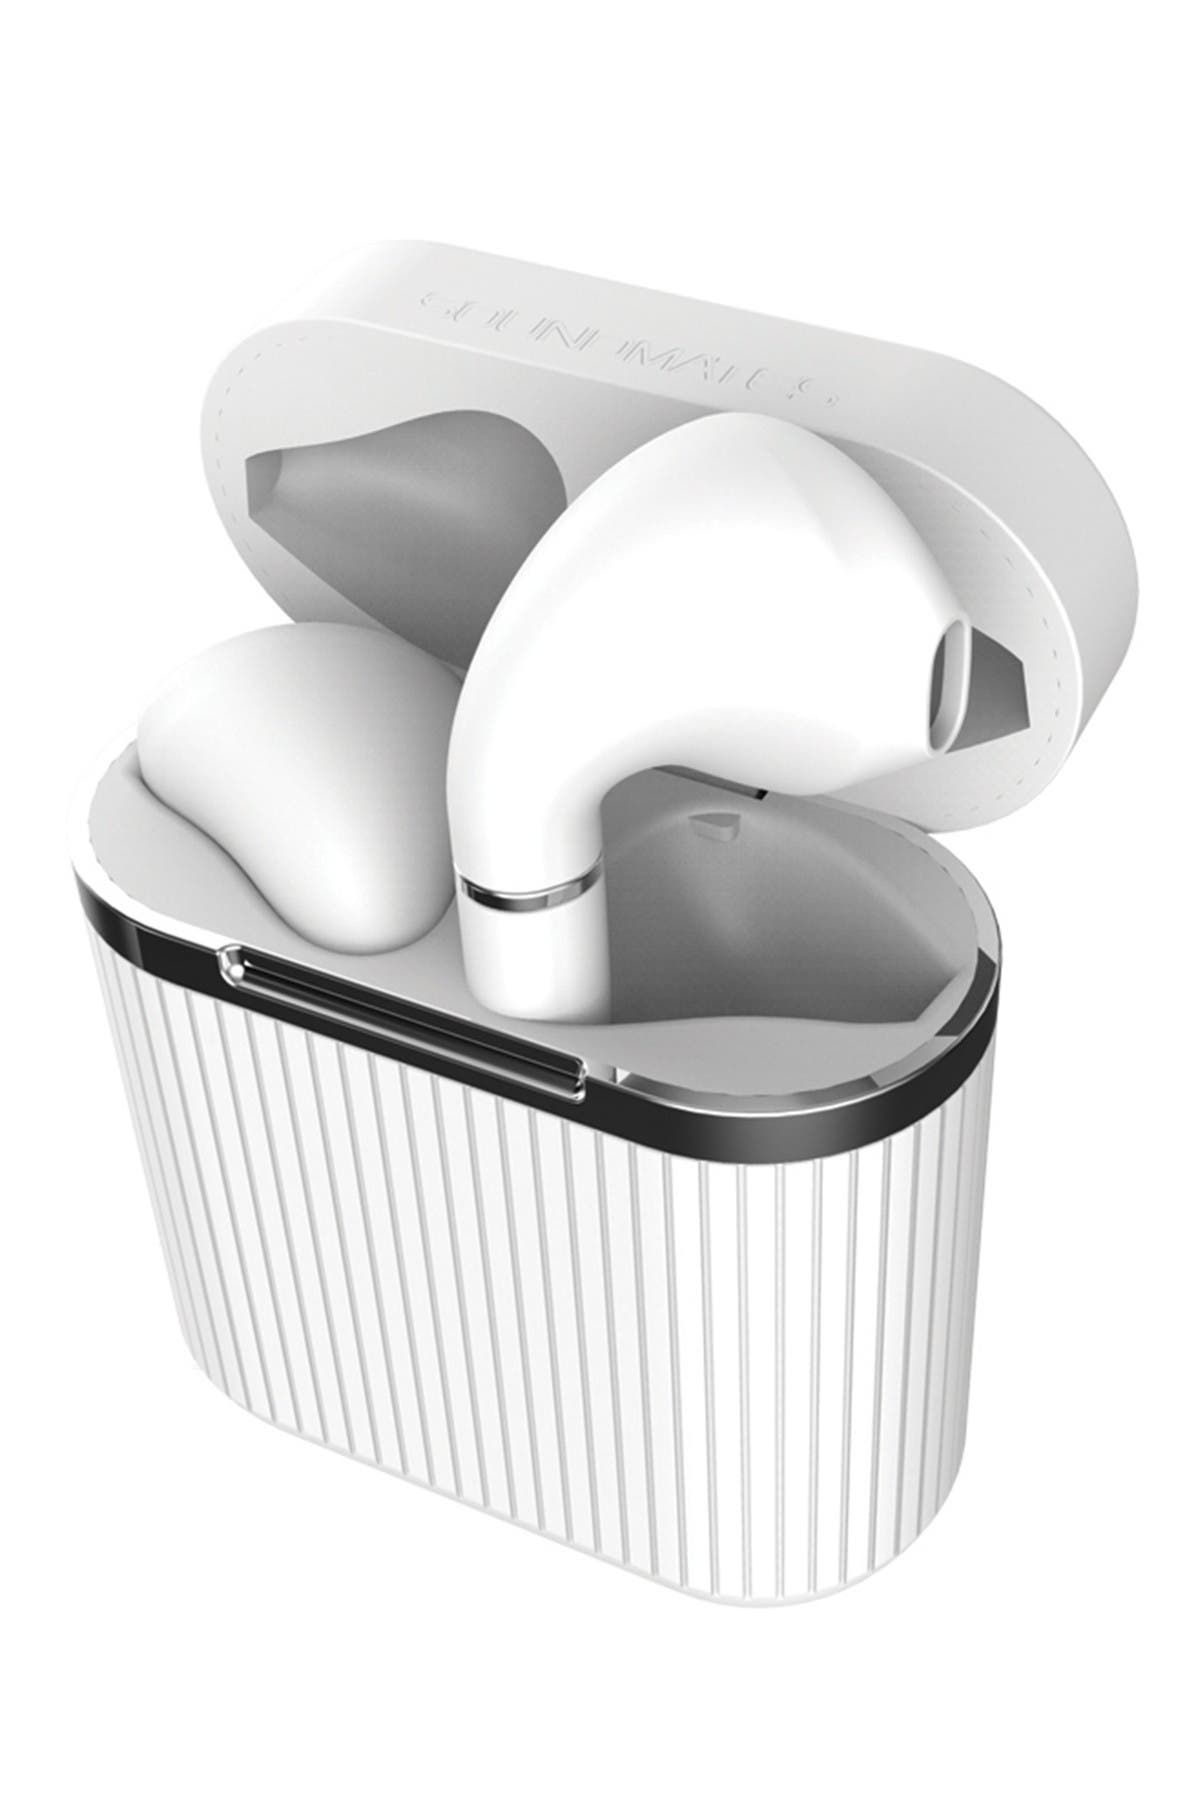 Tzumi Soundmates 5.0 Wireless Earbuds In White